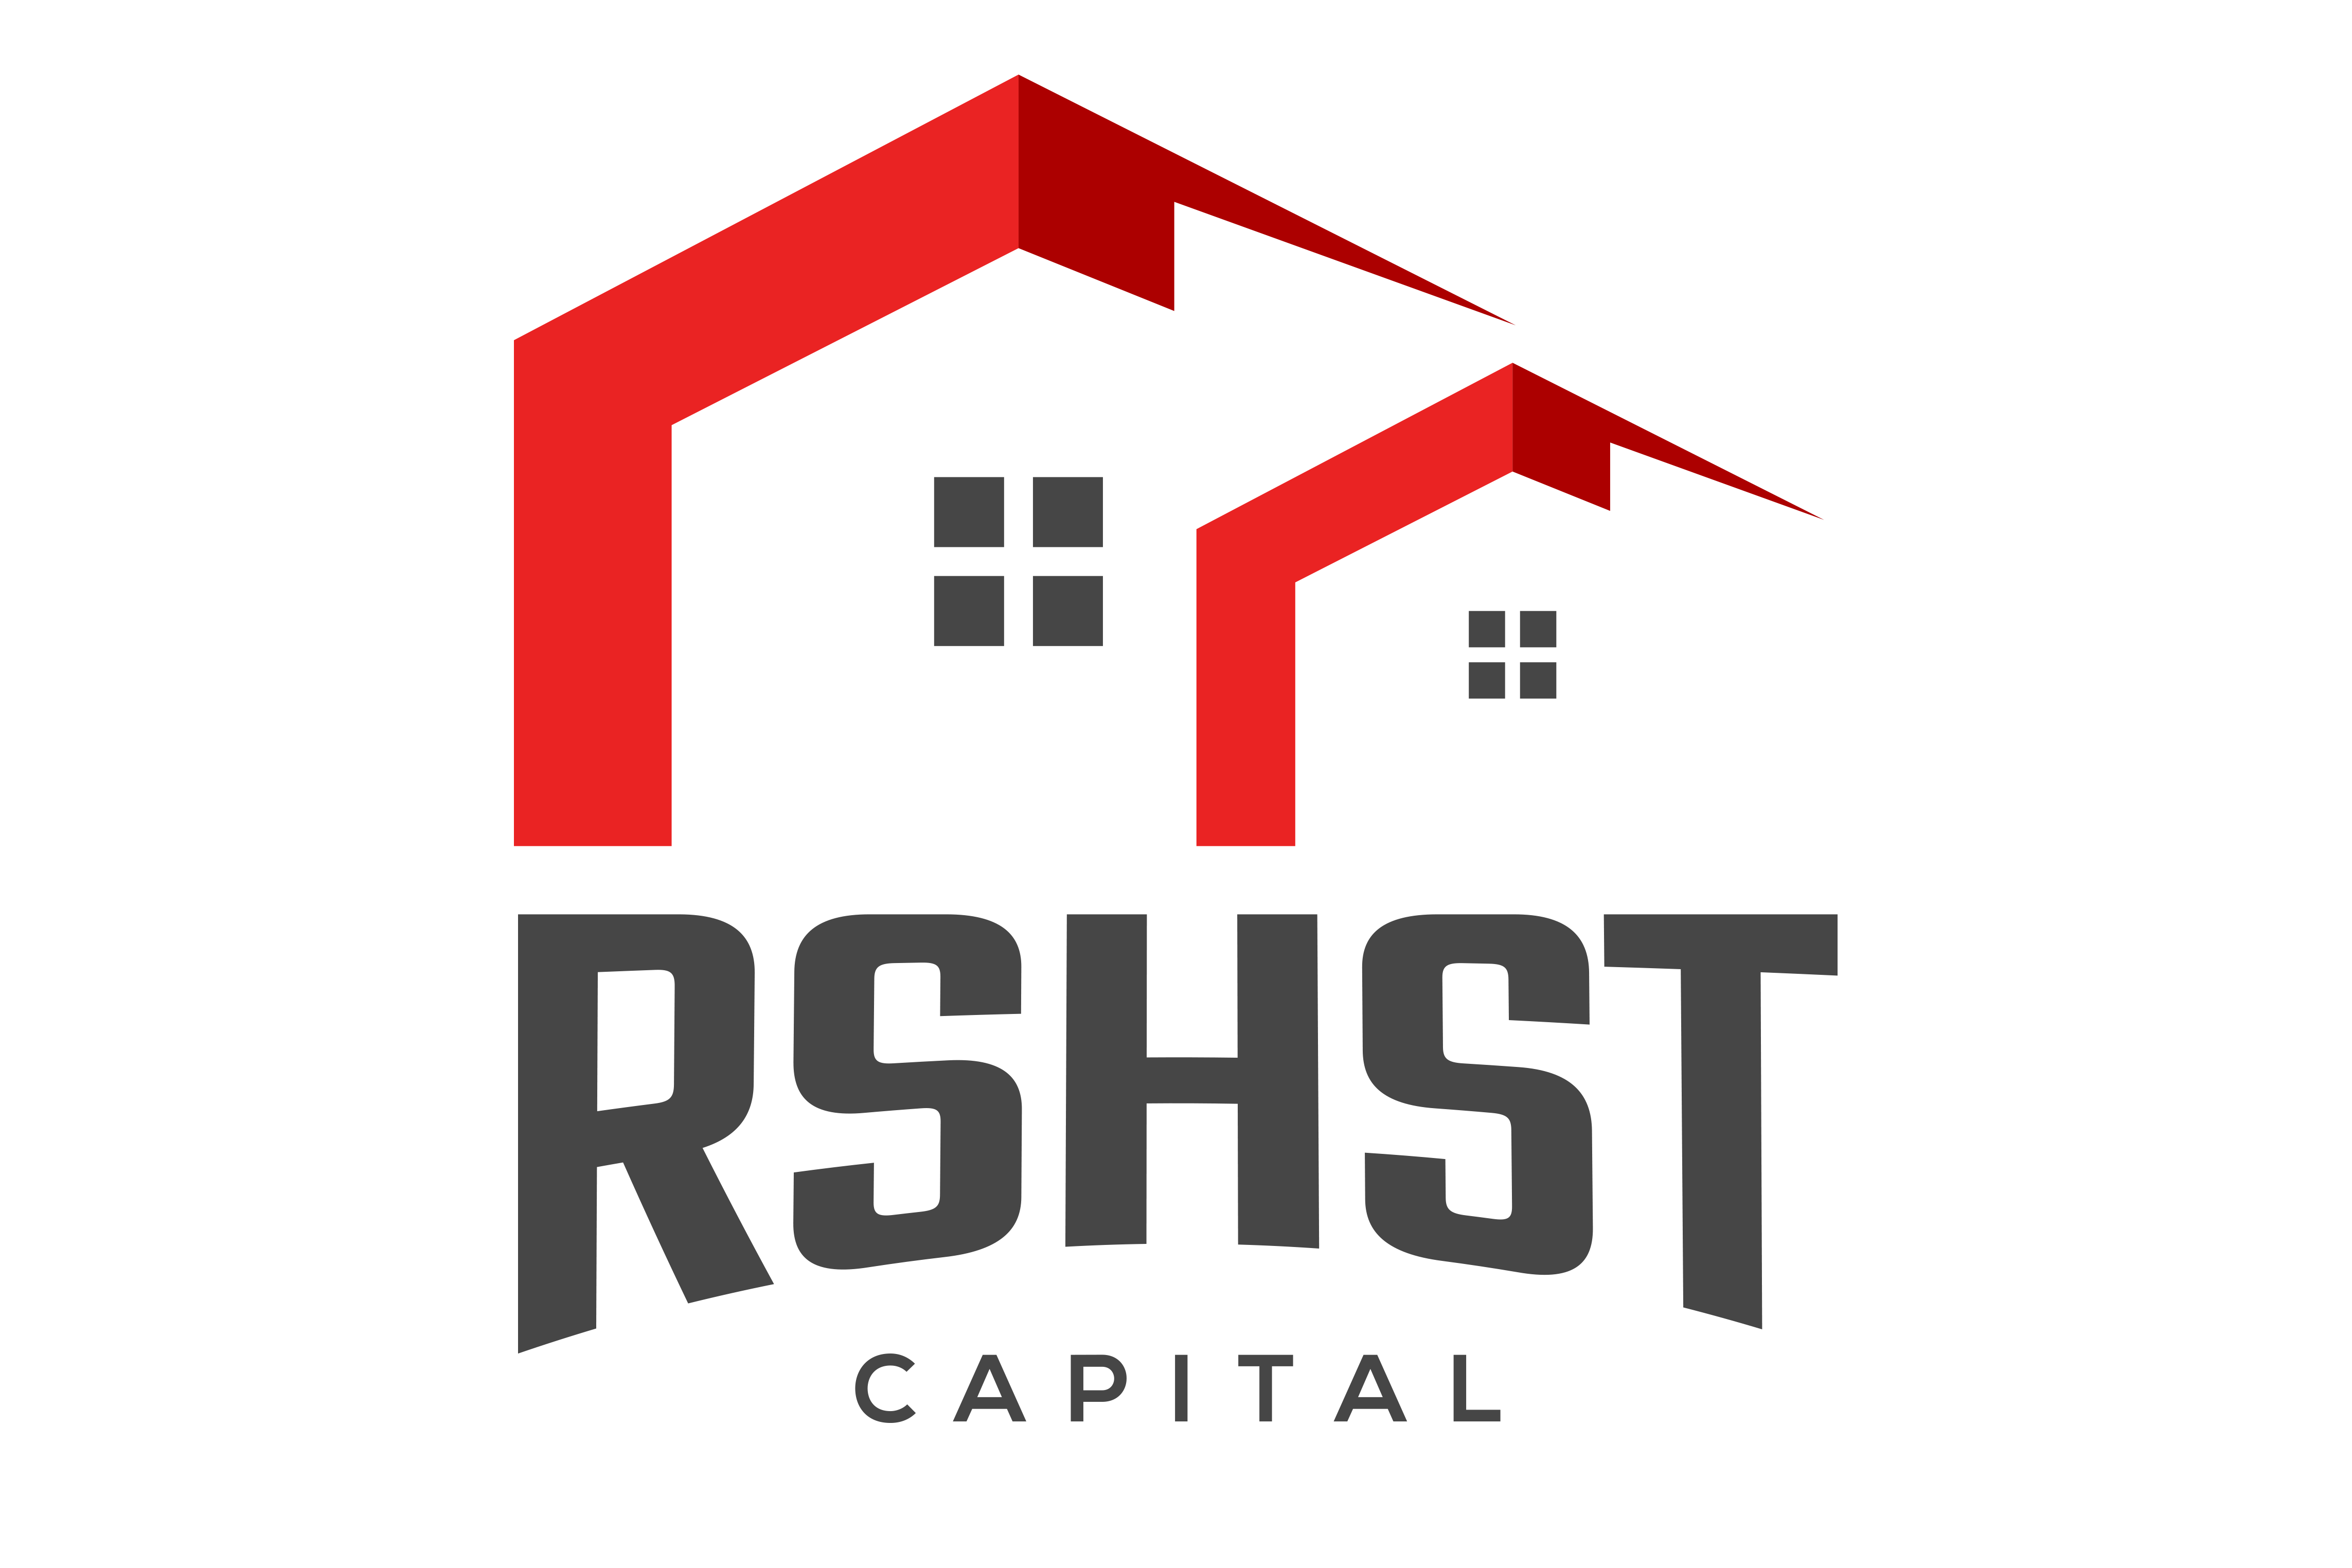 RSHST Capital 